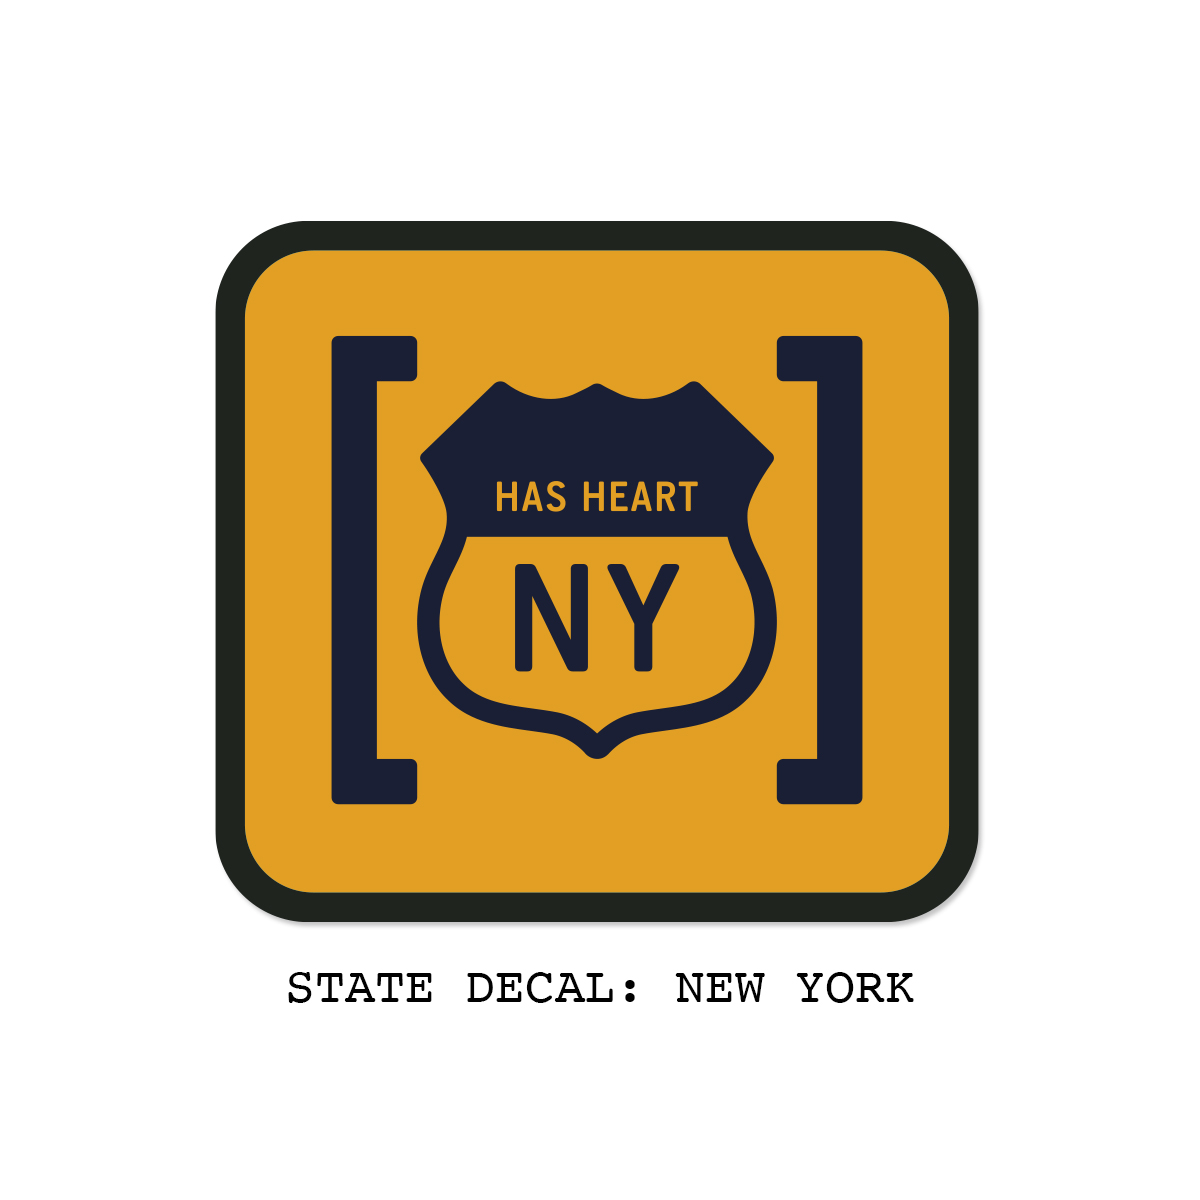 hasheart-statedecal-NY